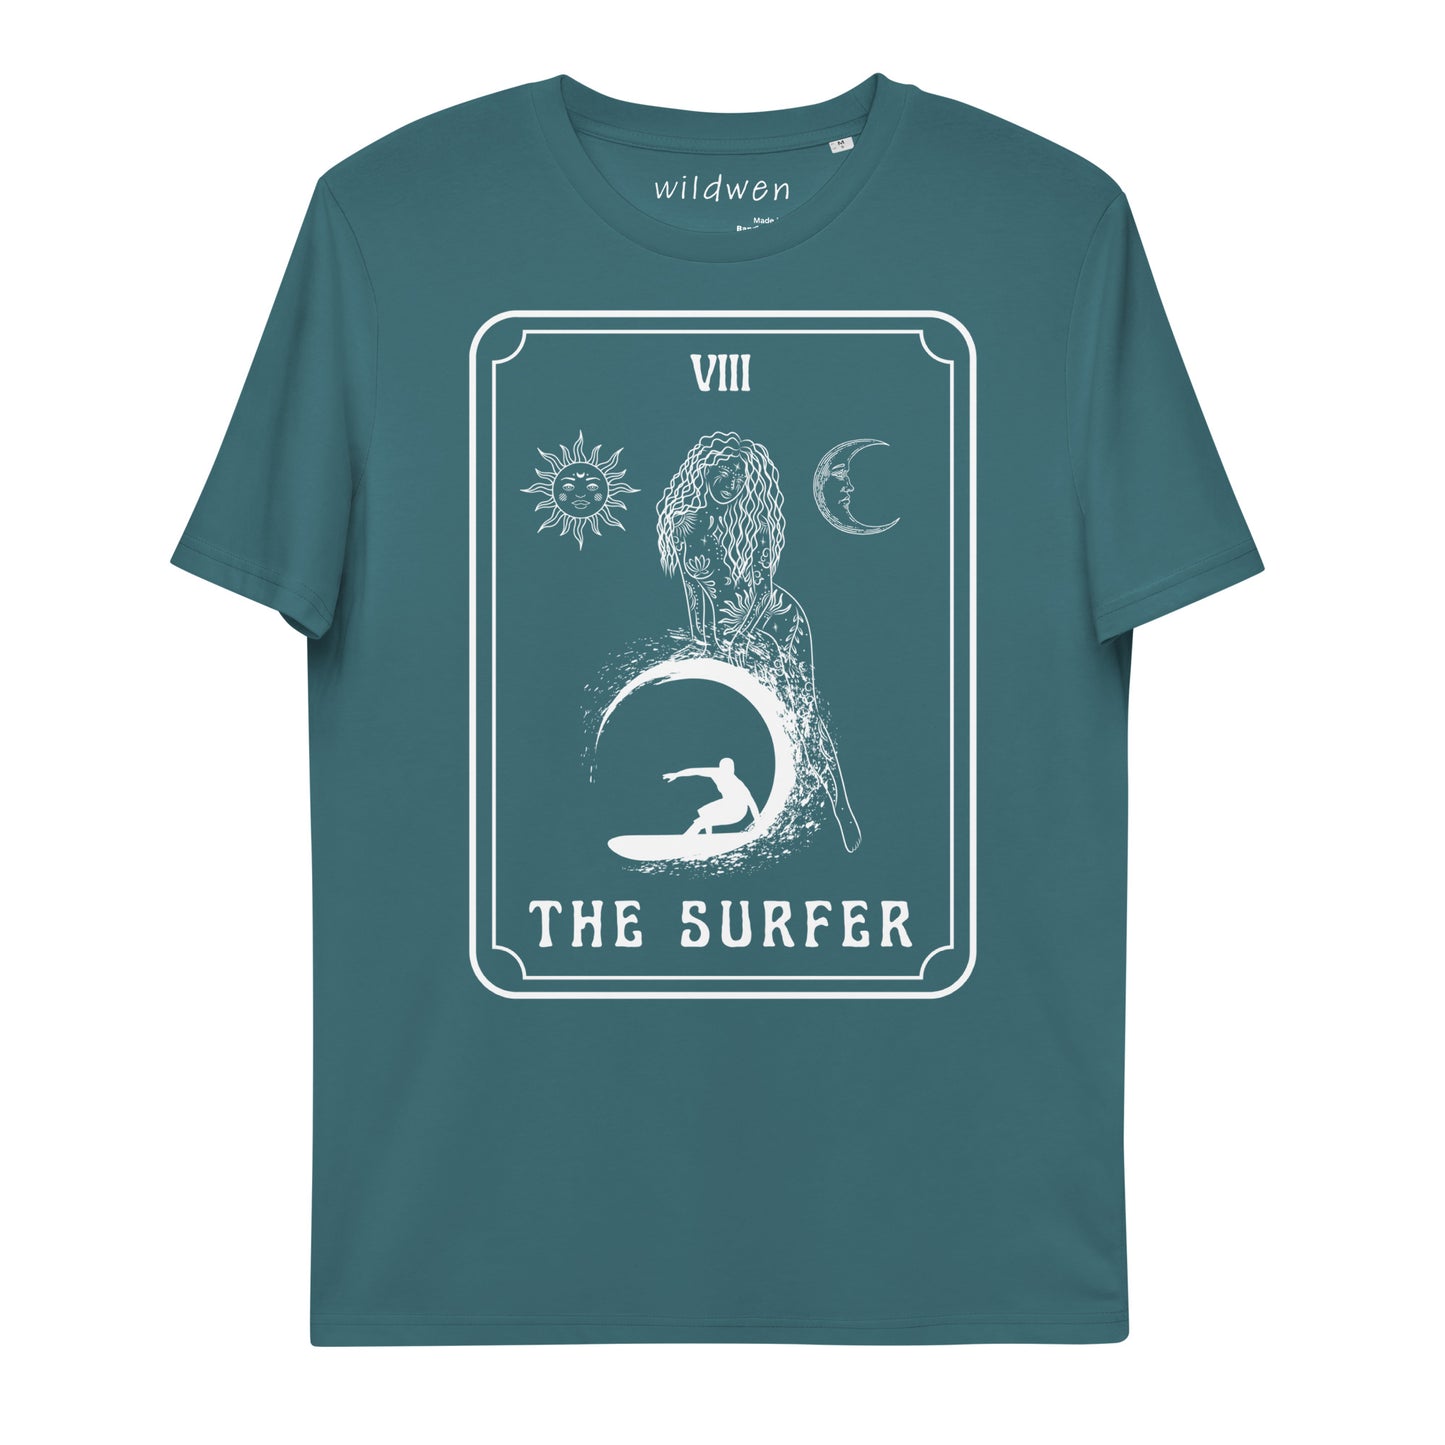 Tarot: The Surfer